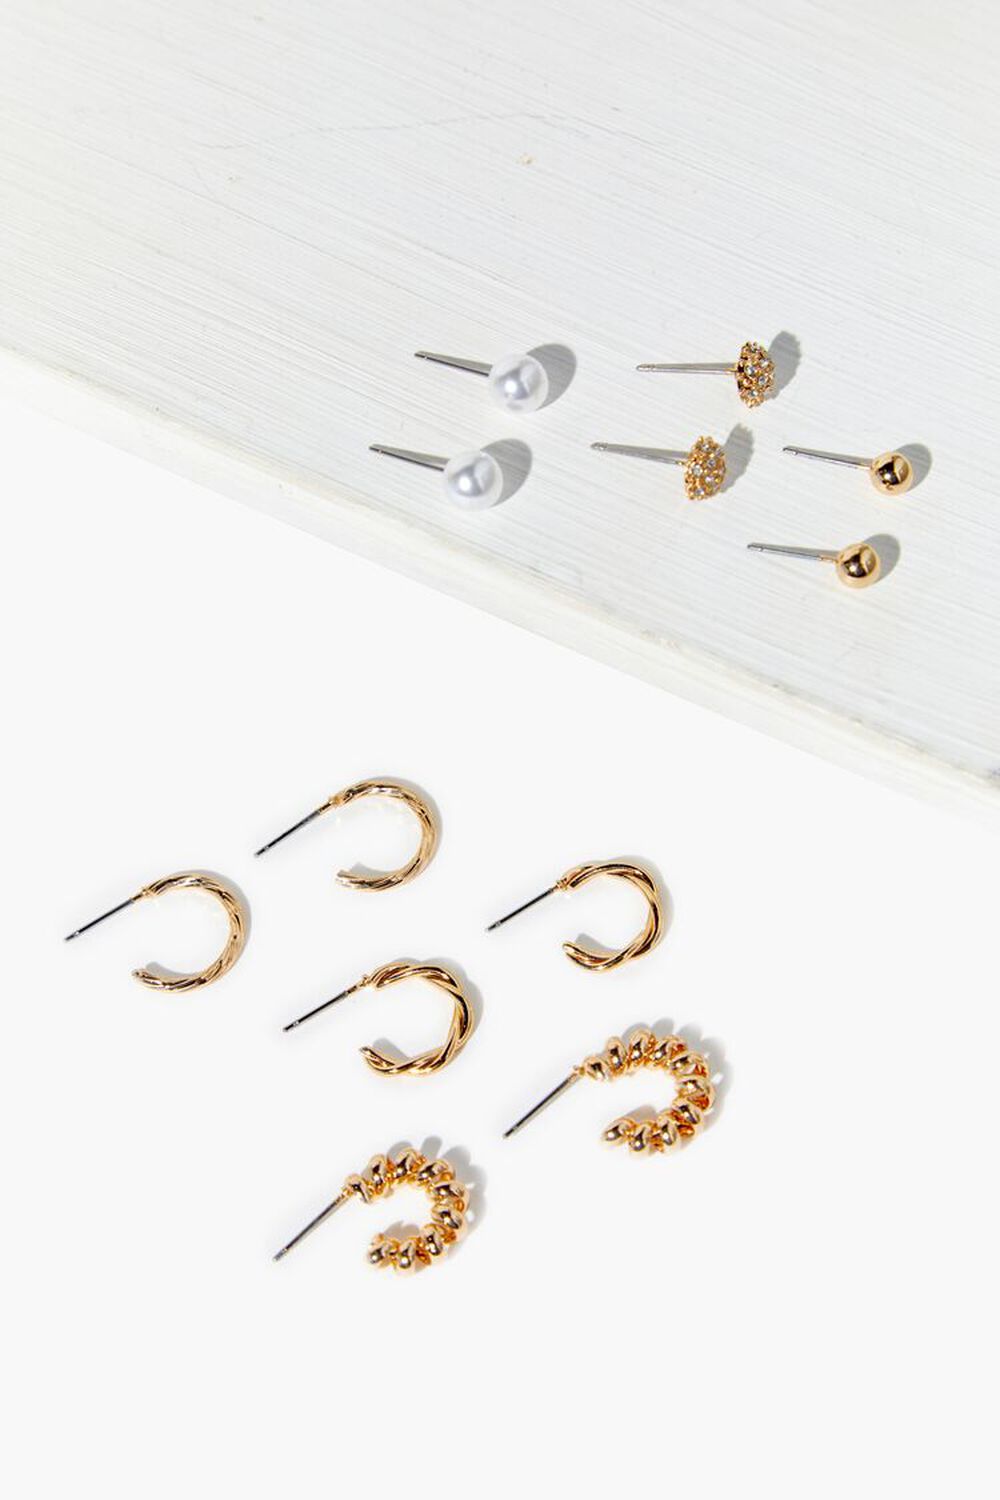 GOLD Studs & Hoops Earring Set, image 1